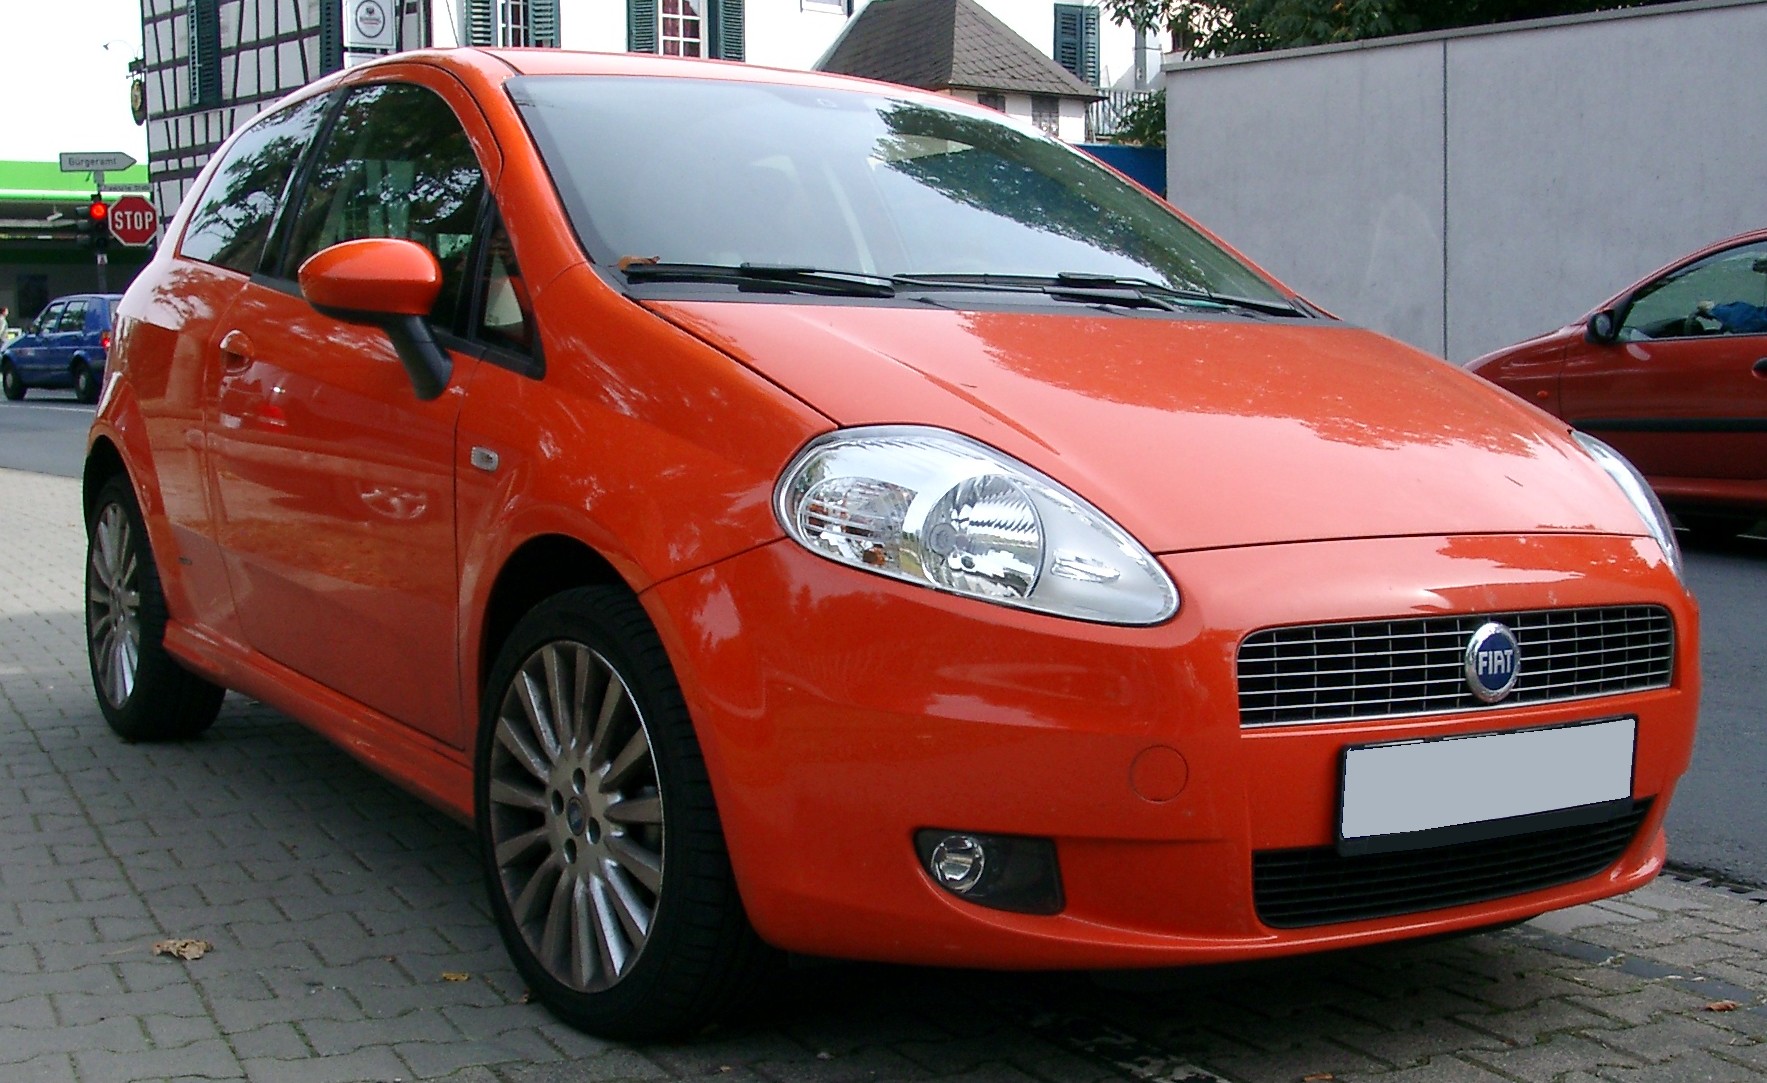 Dossier: Fiat Punto avant 20070920.jpg